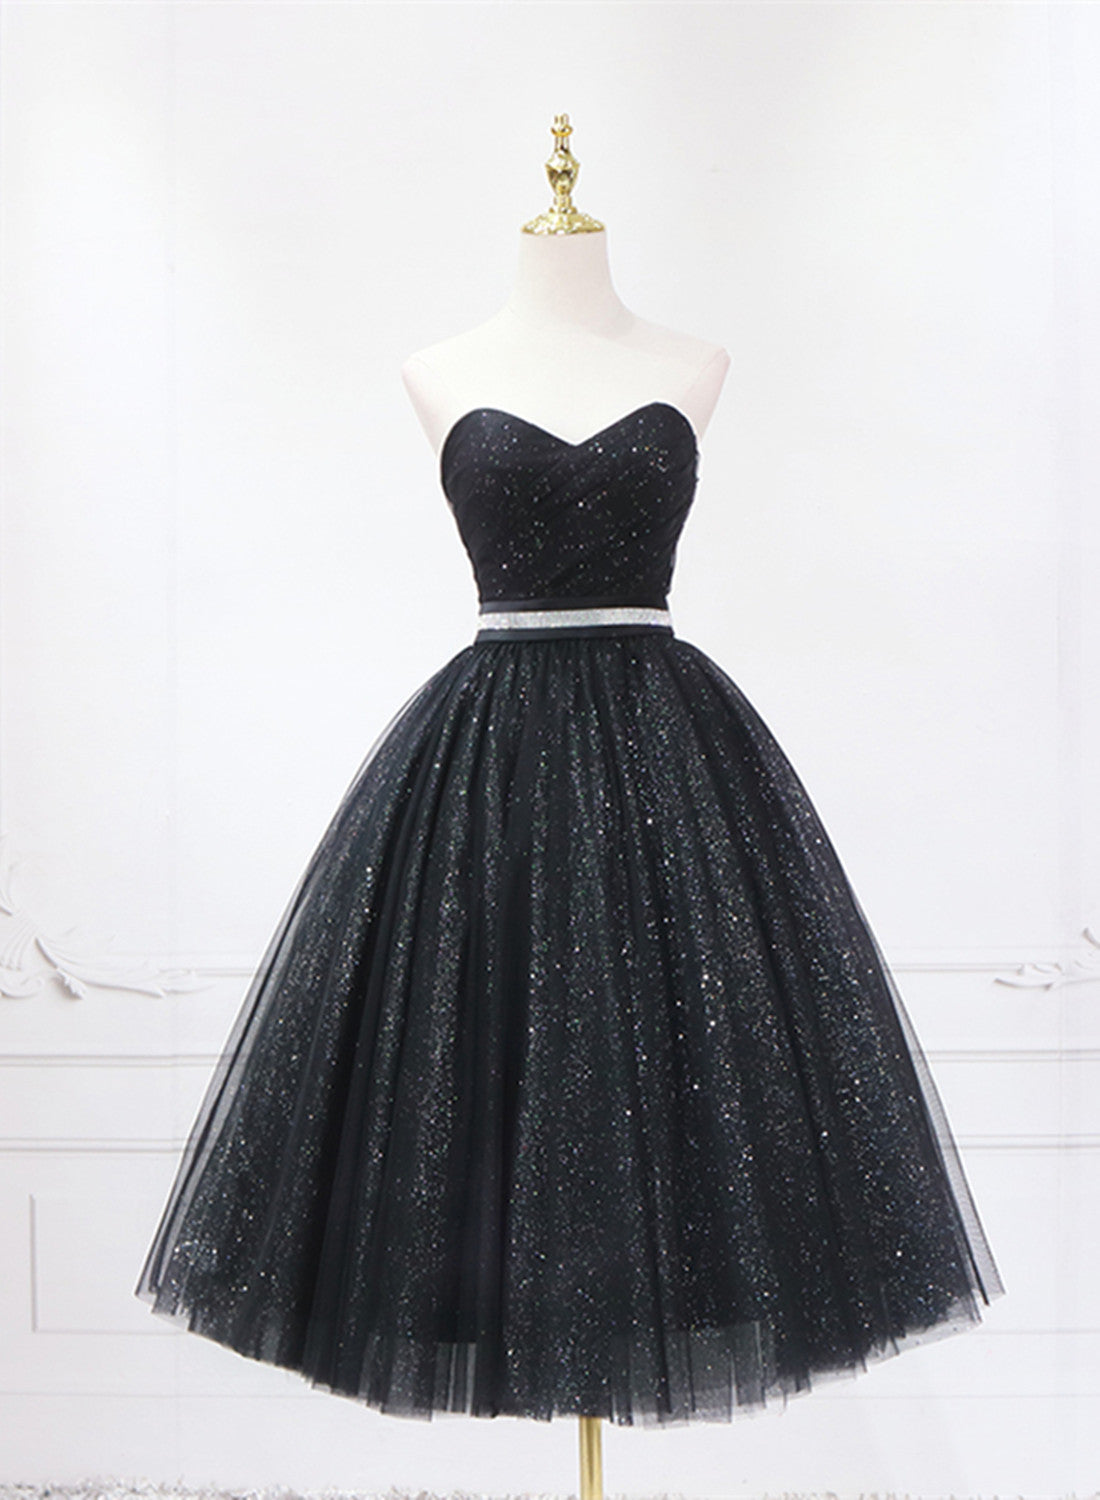 Shiny Black Sweetheart Tea Length Tulle Corset Prom Dress, Black Evening Dress Corset Homecoming Dress outfit, Formal Dresses 2029